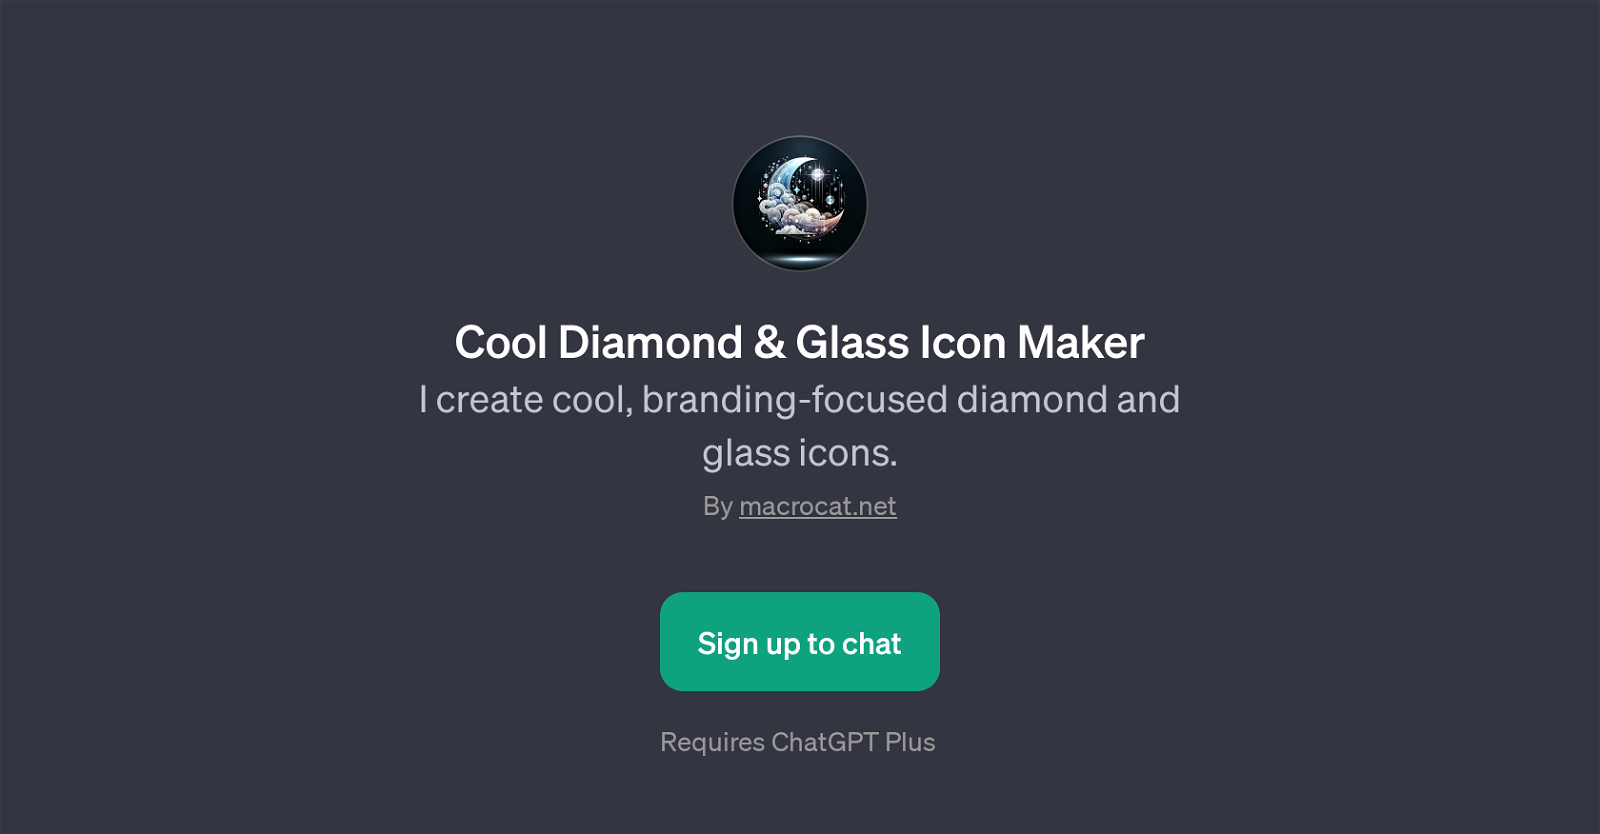 Cool Diamond & Glass Icon Maker website